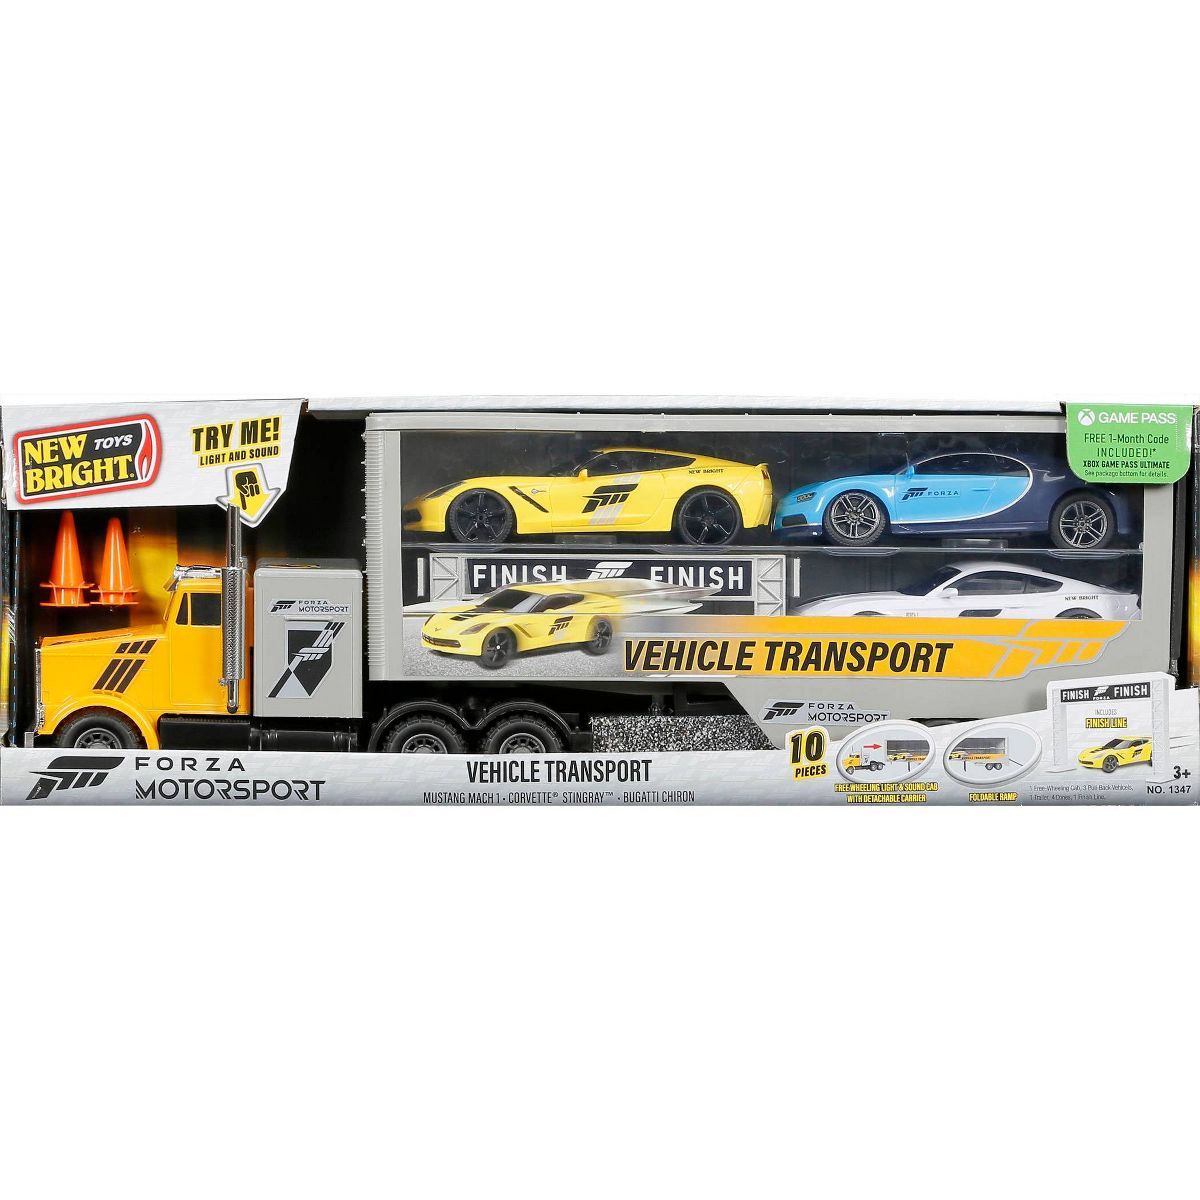 New Bright Forza Motorsport Hauler Set - 1:24 Scale | Target